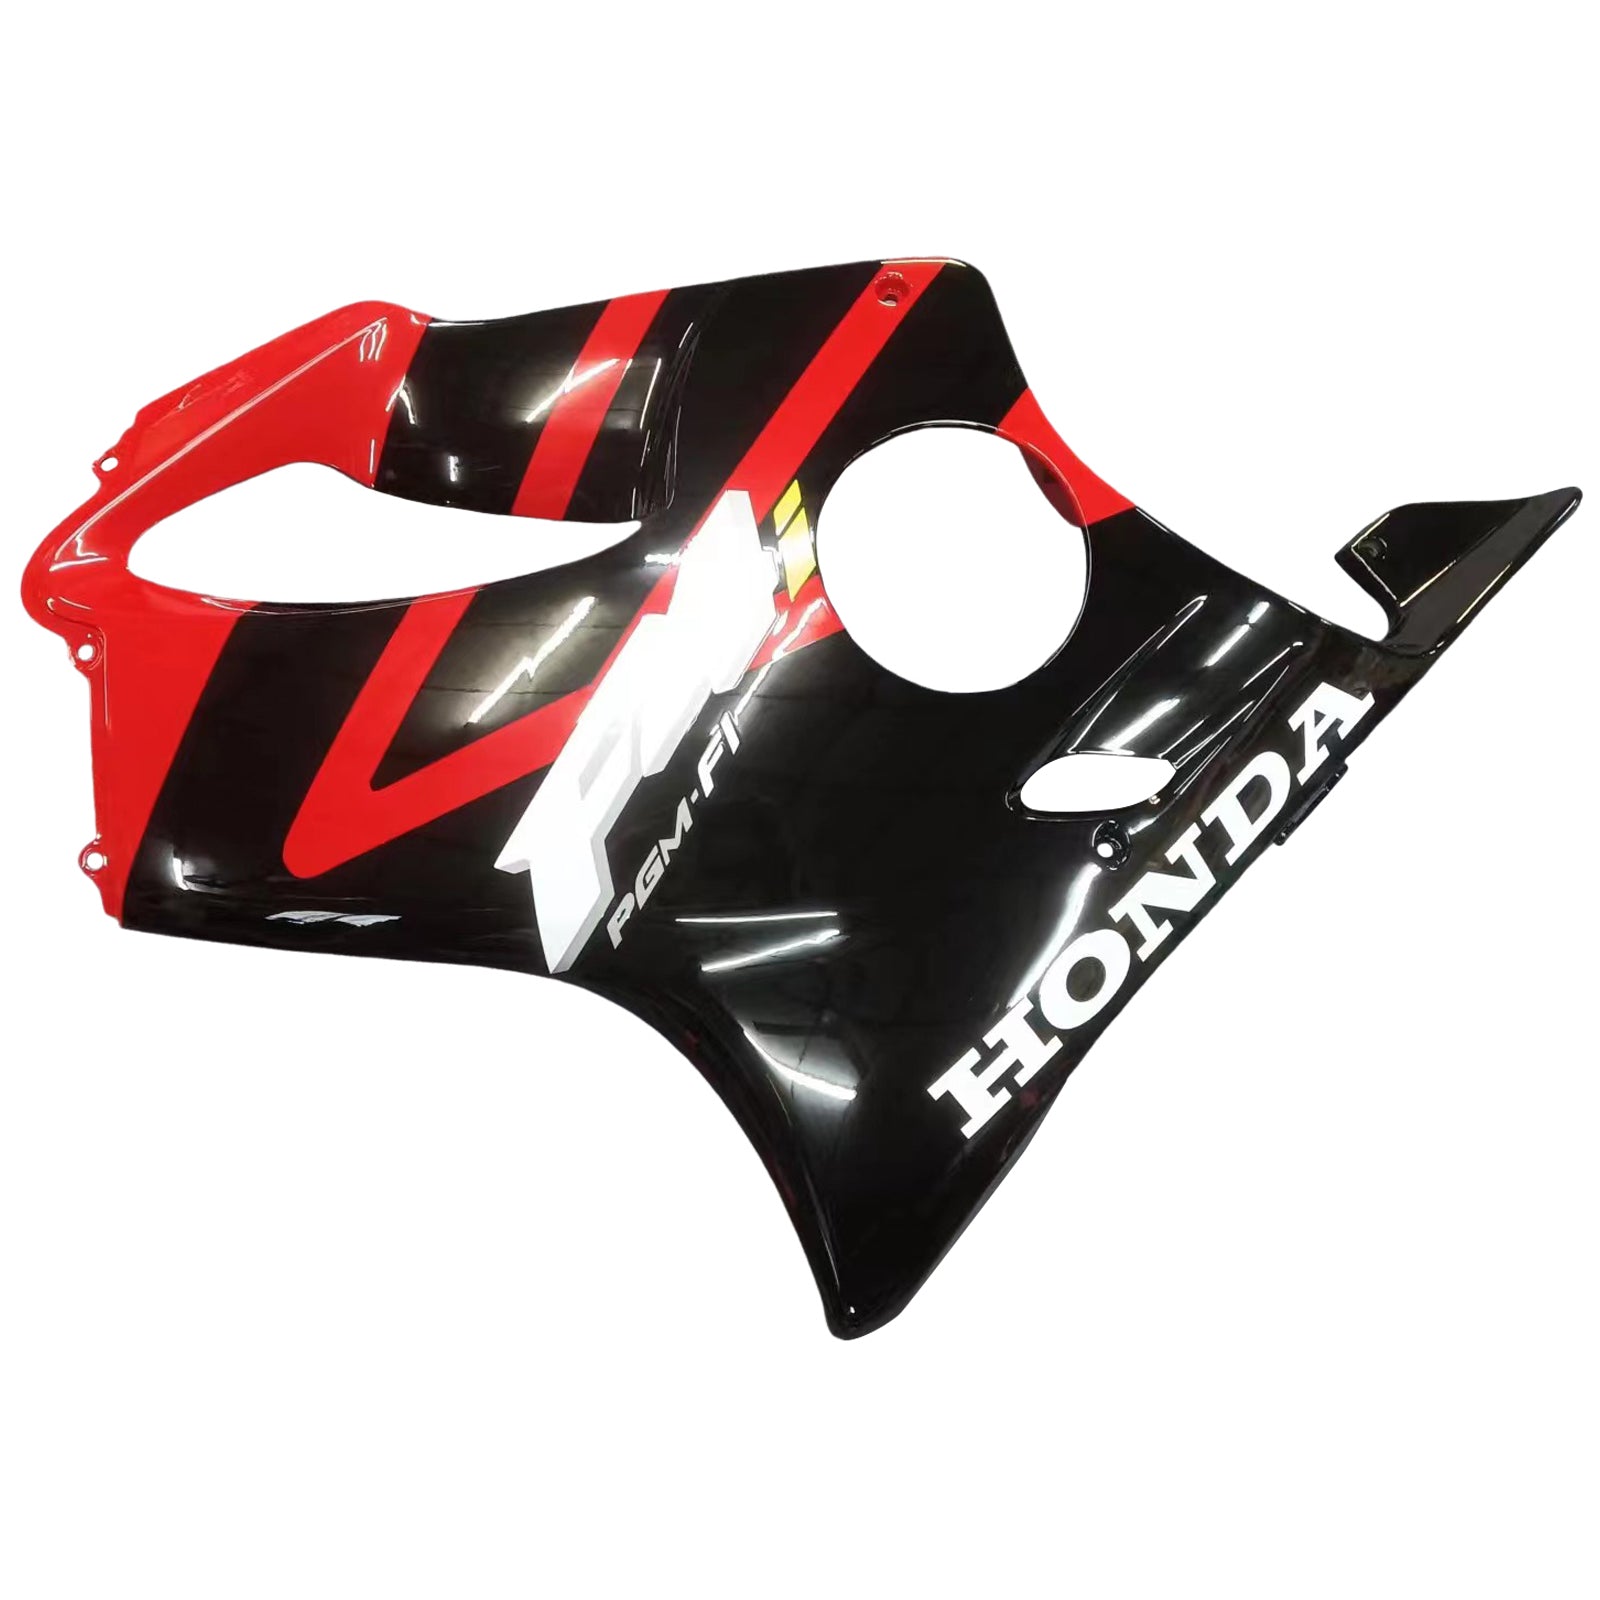 Amotopart 2004-2007 Kit carena Honda CBR600 F4i rosso e nero